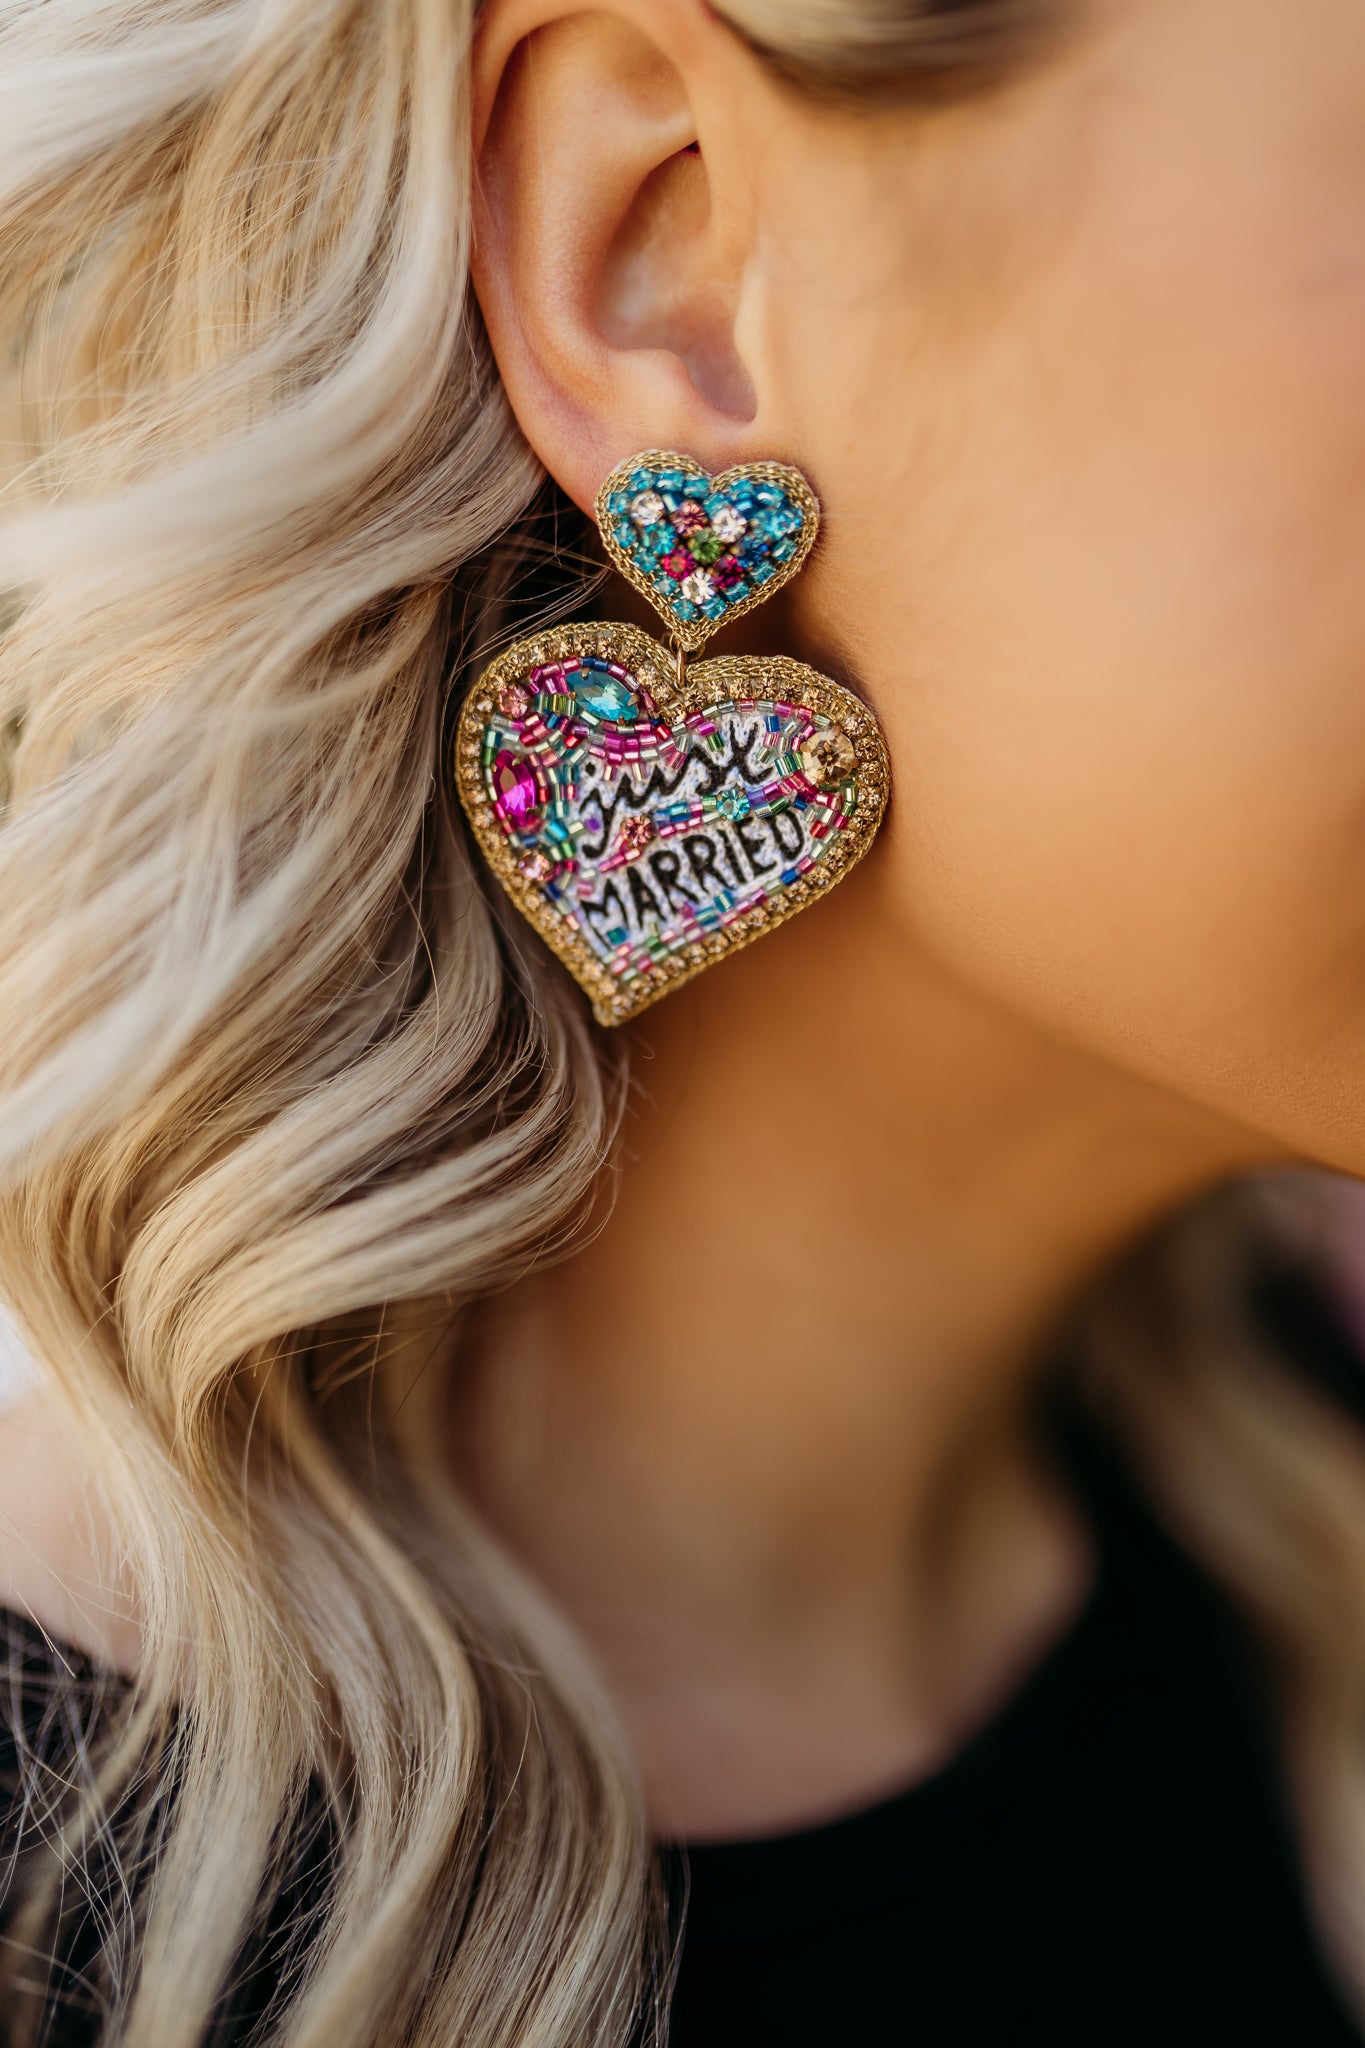 Just Married Beaded Heart Earrings by Taylor Shaye